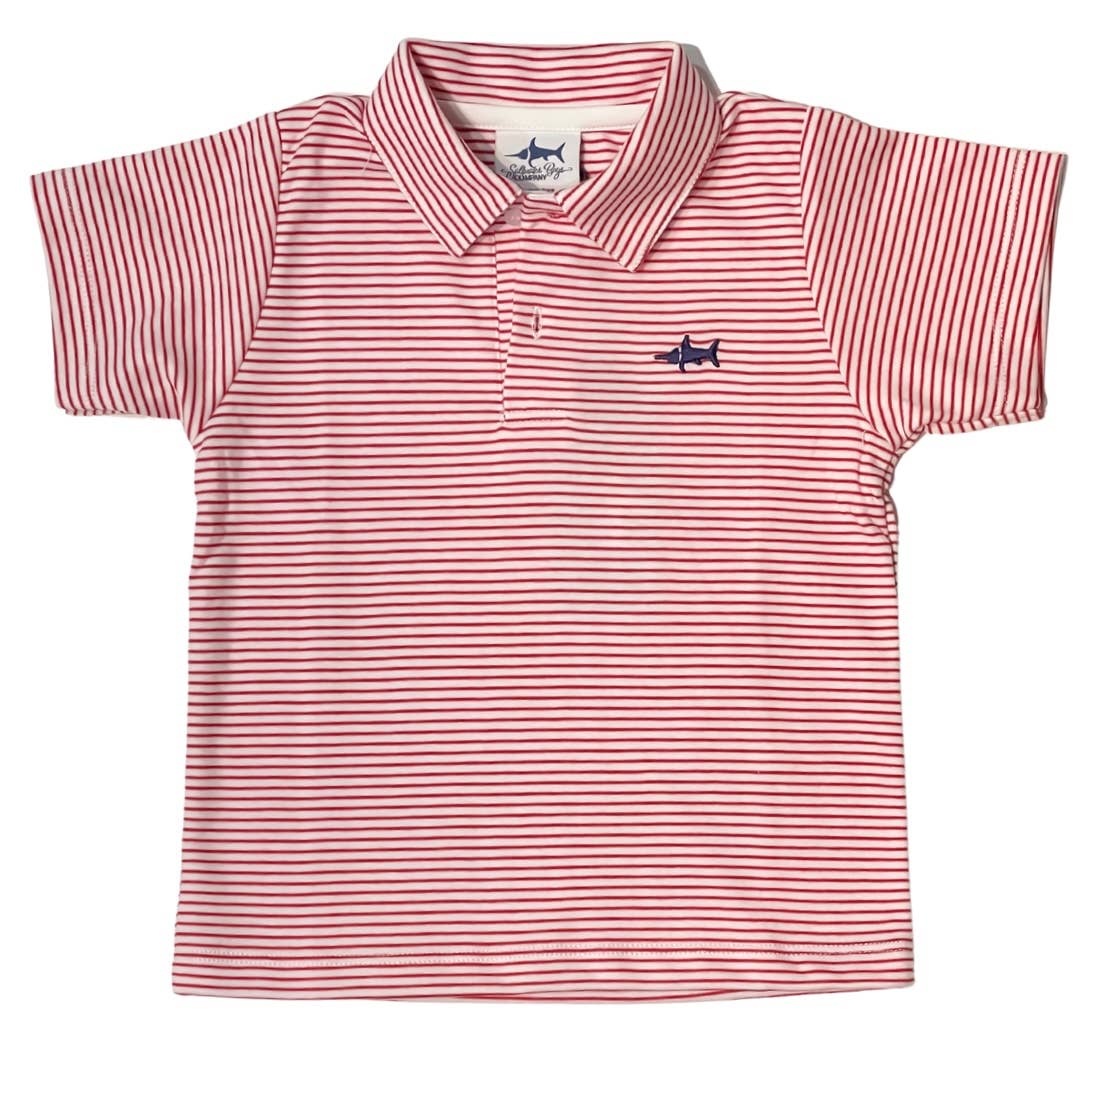 Signature Pima polo shirt- Red/White Stripe Saltwater Boys Co.